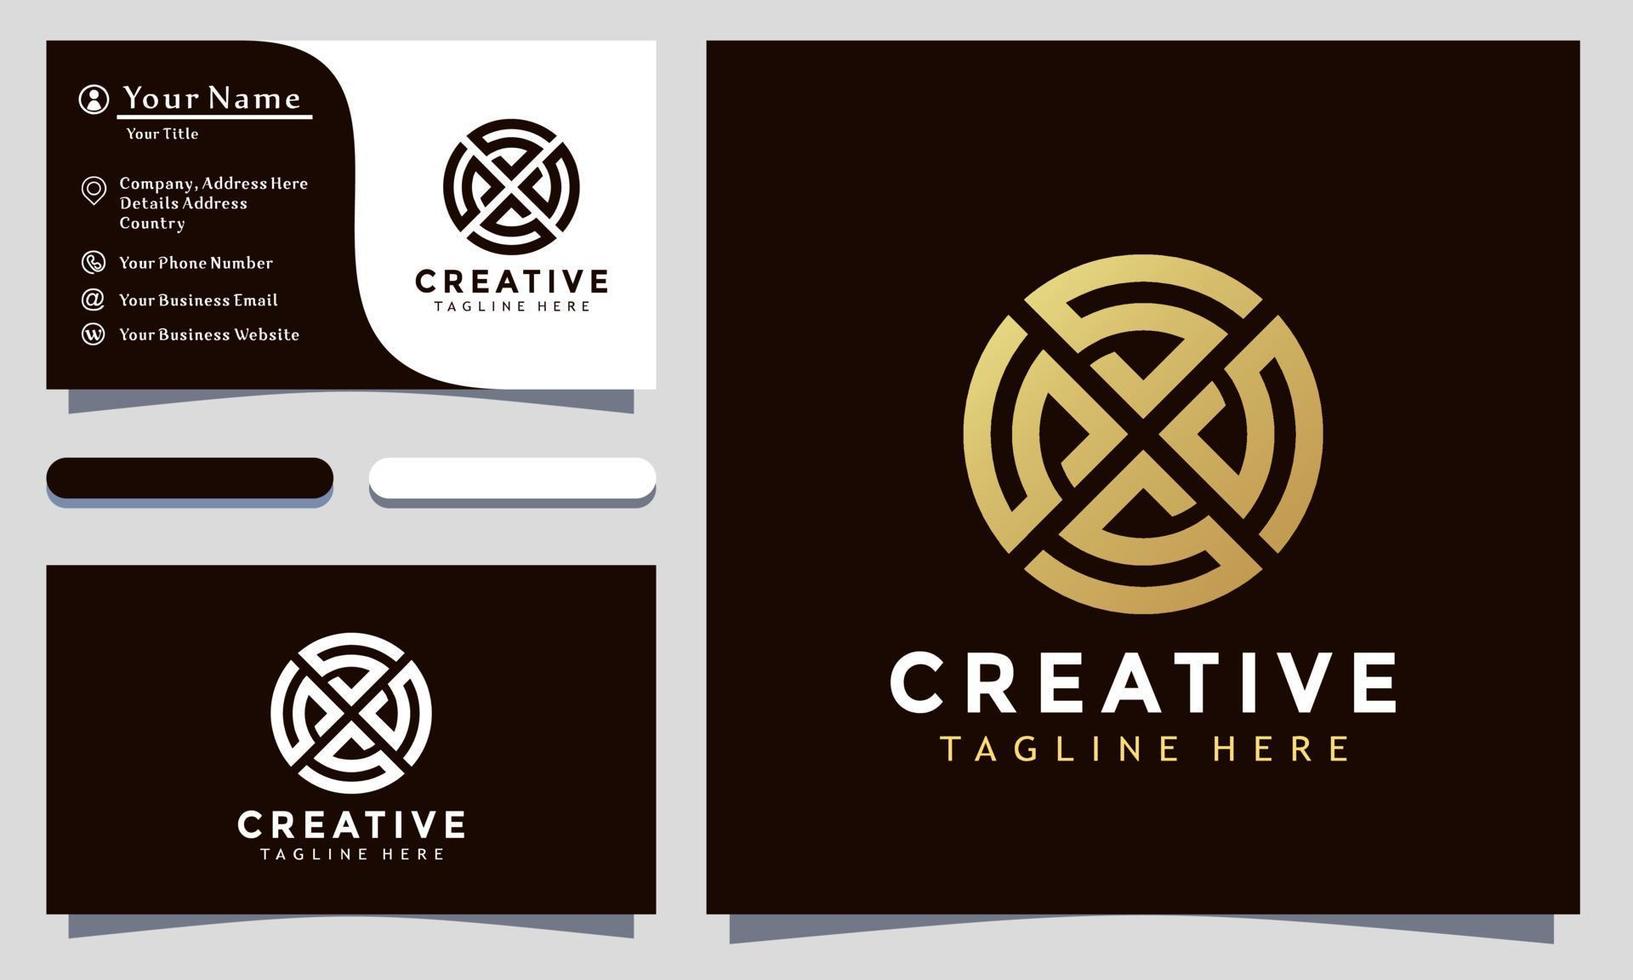 Goldbuchstabe s Kreis geometrische kreative Logo-Design-Vektor-Illustration, minimalistische elegante, moderne Firmen-Visitenkartenvorlage vektor